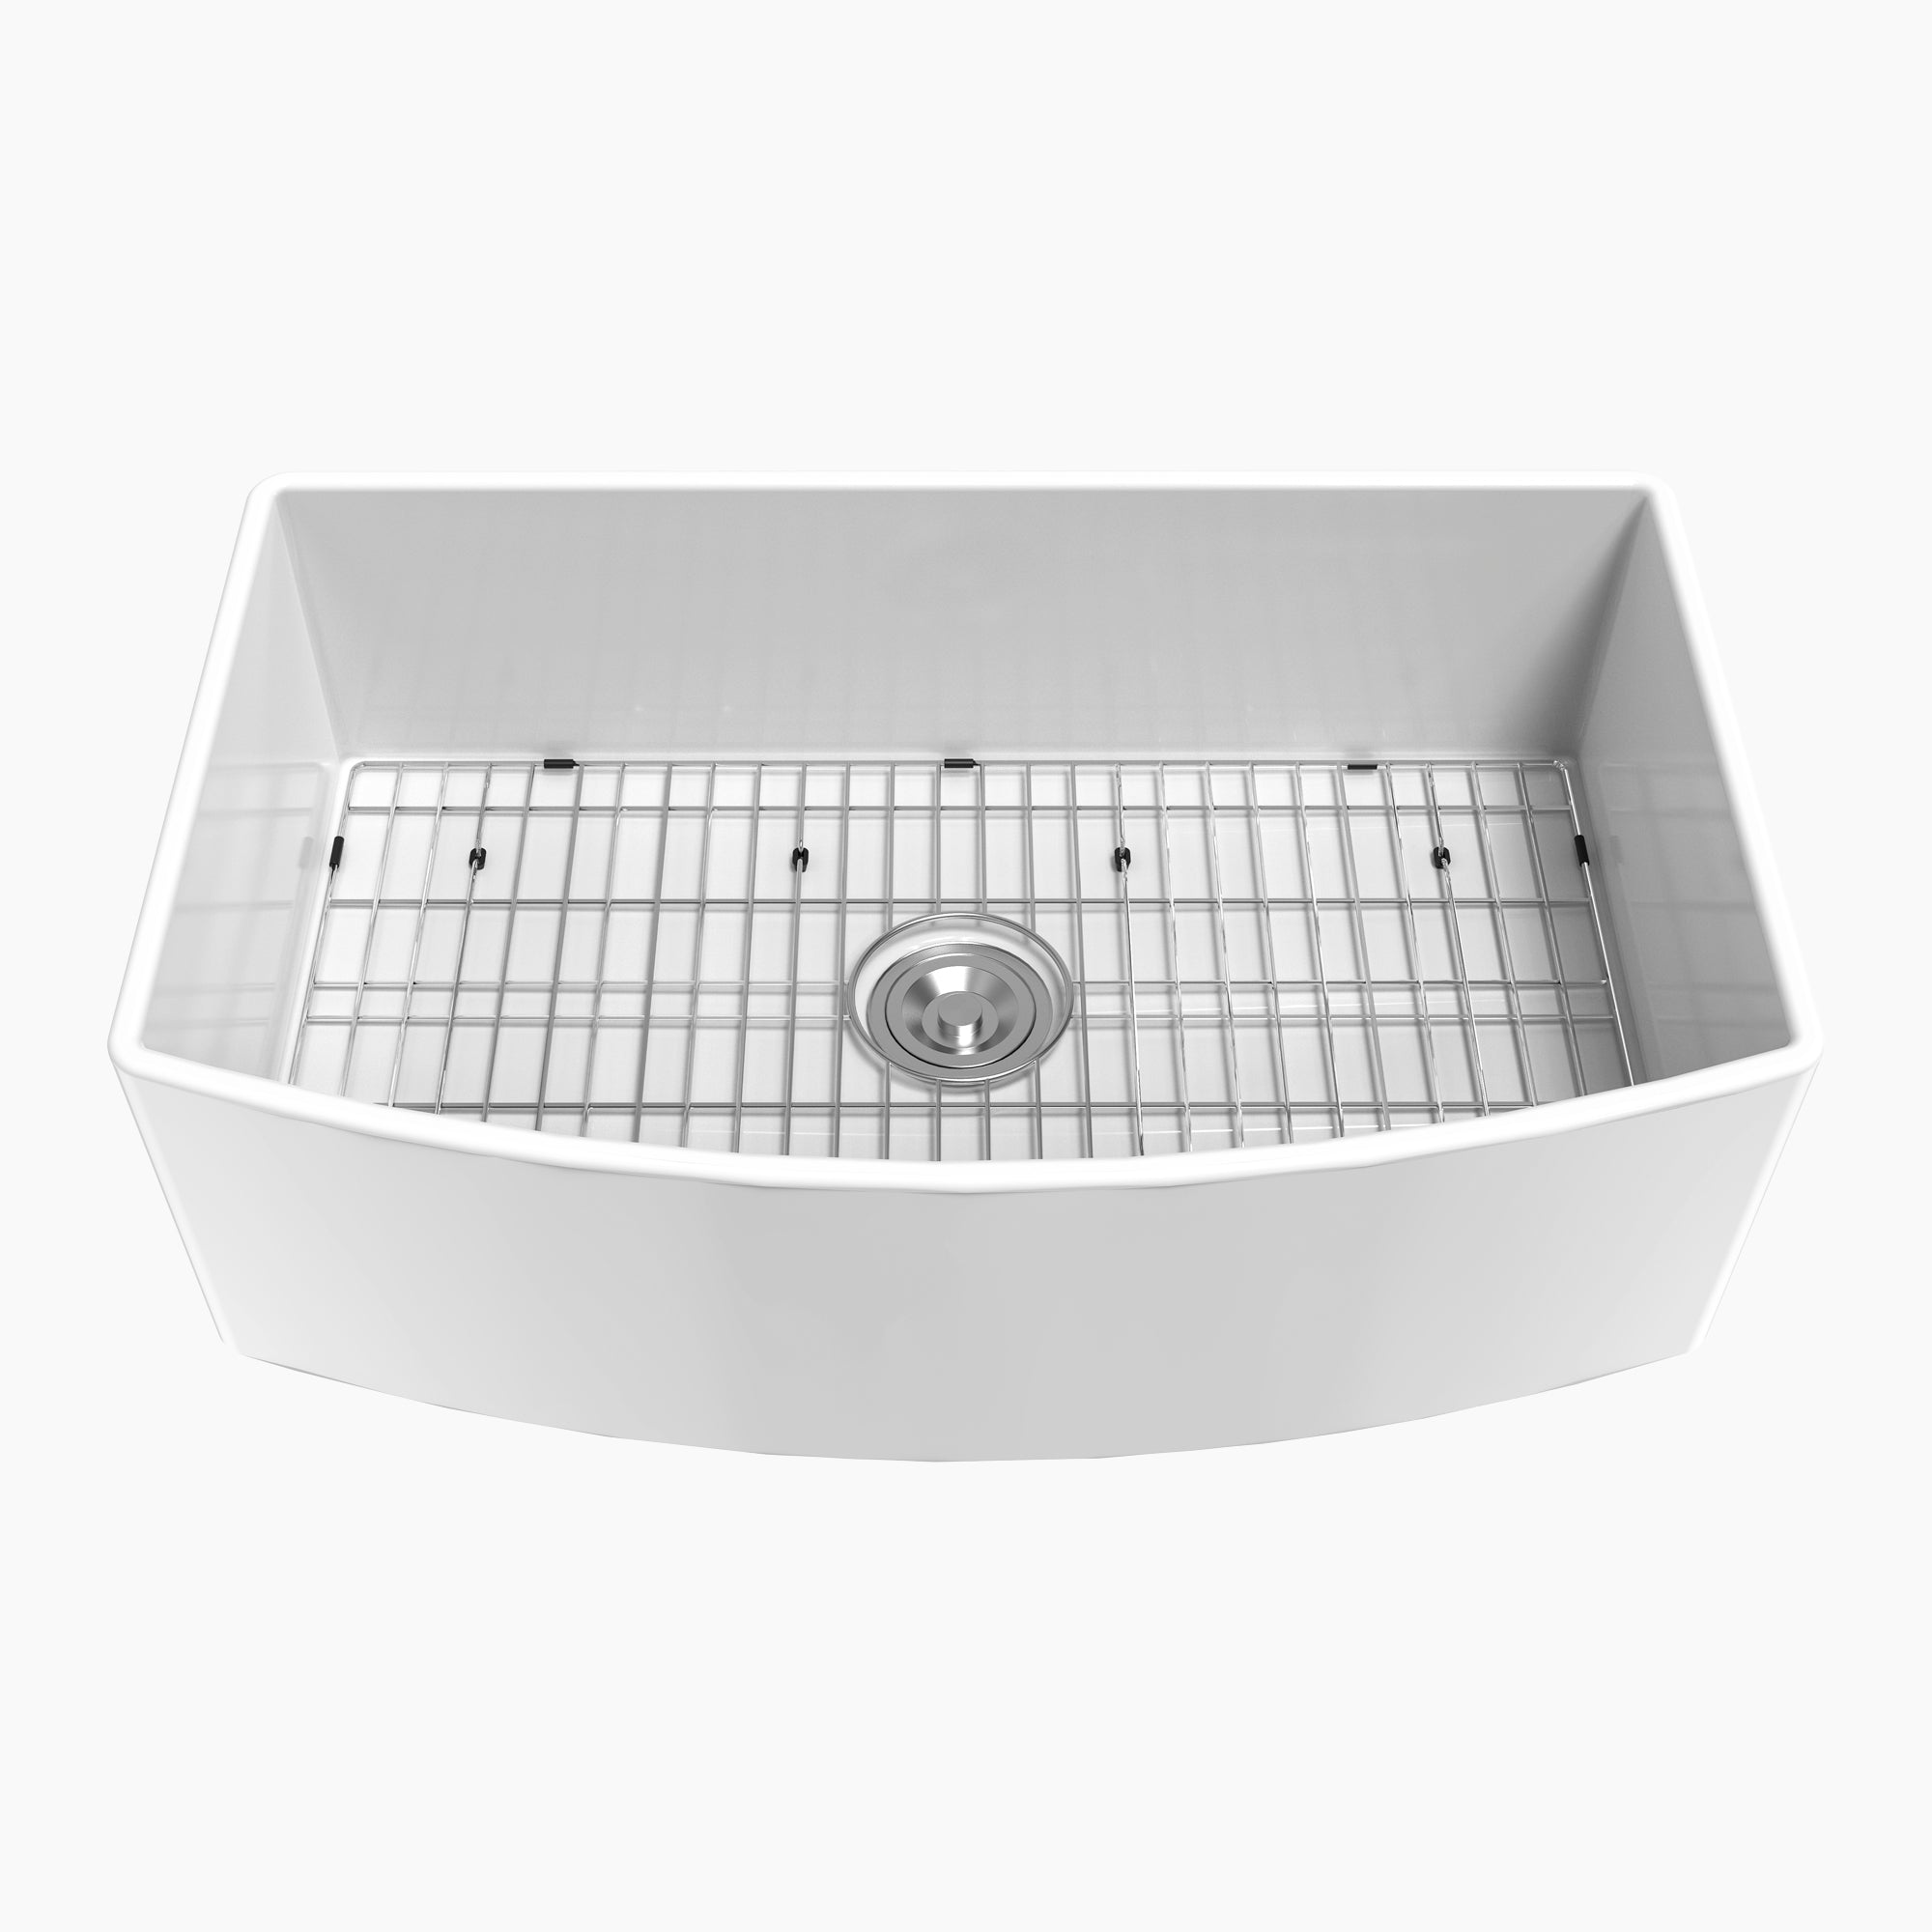 HOROW White Kitchen Sink Ceramic Porcelain Fireclay Single Bowl Model HR-S3318R